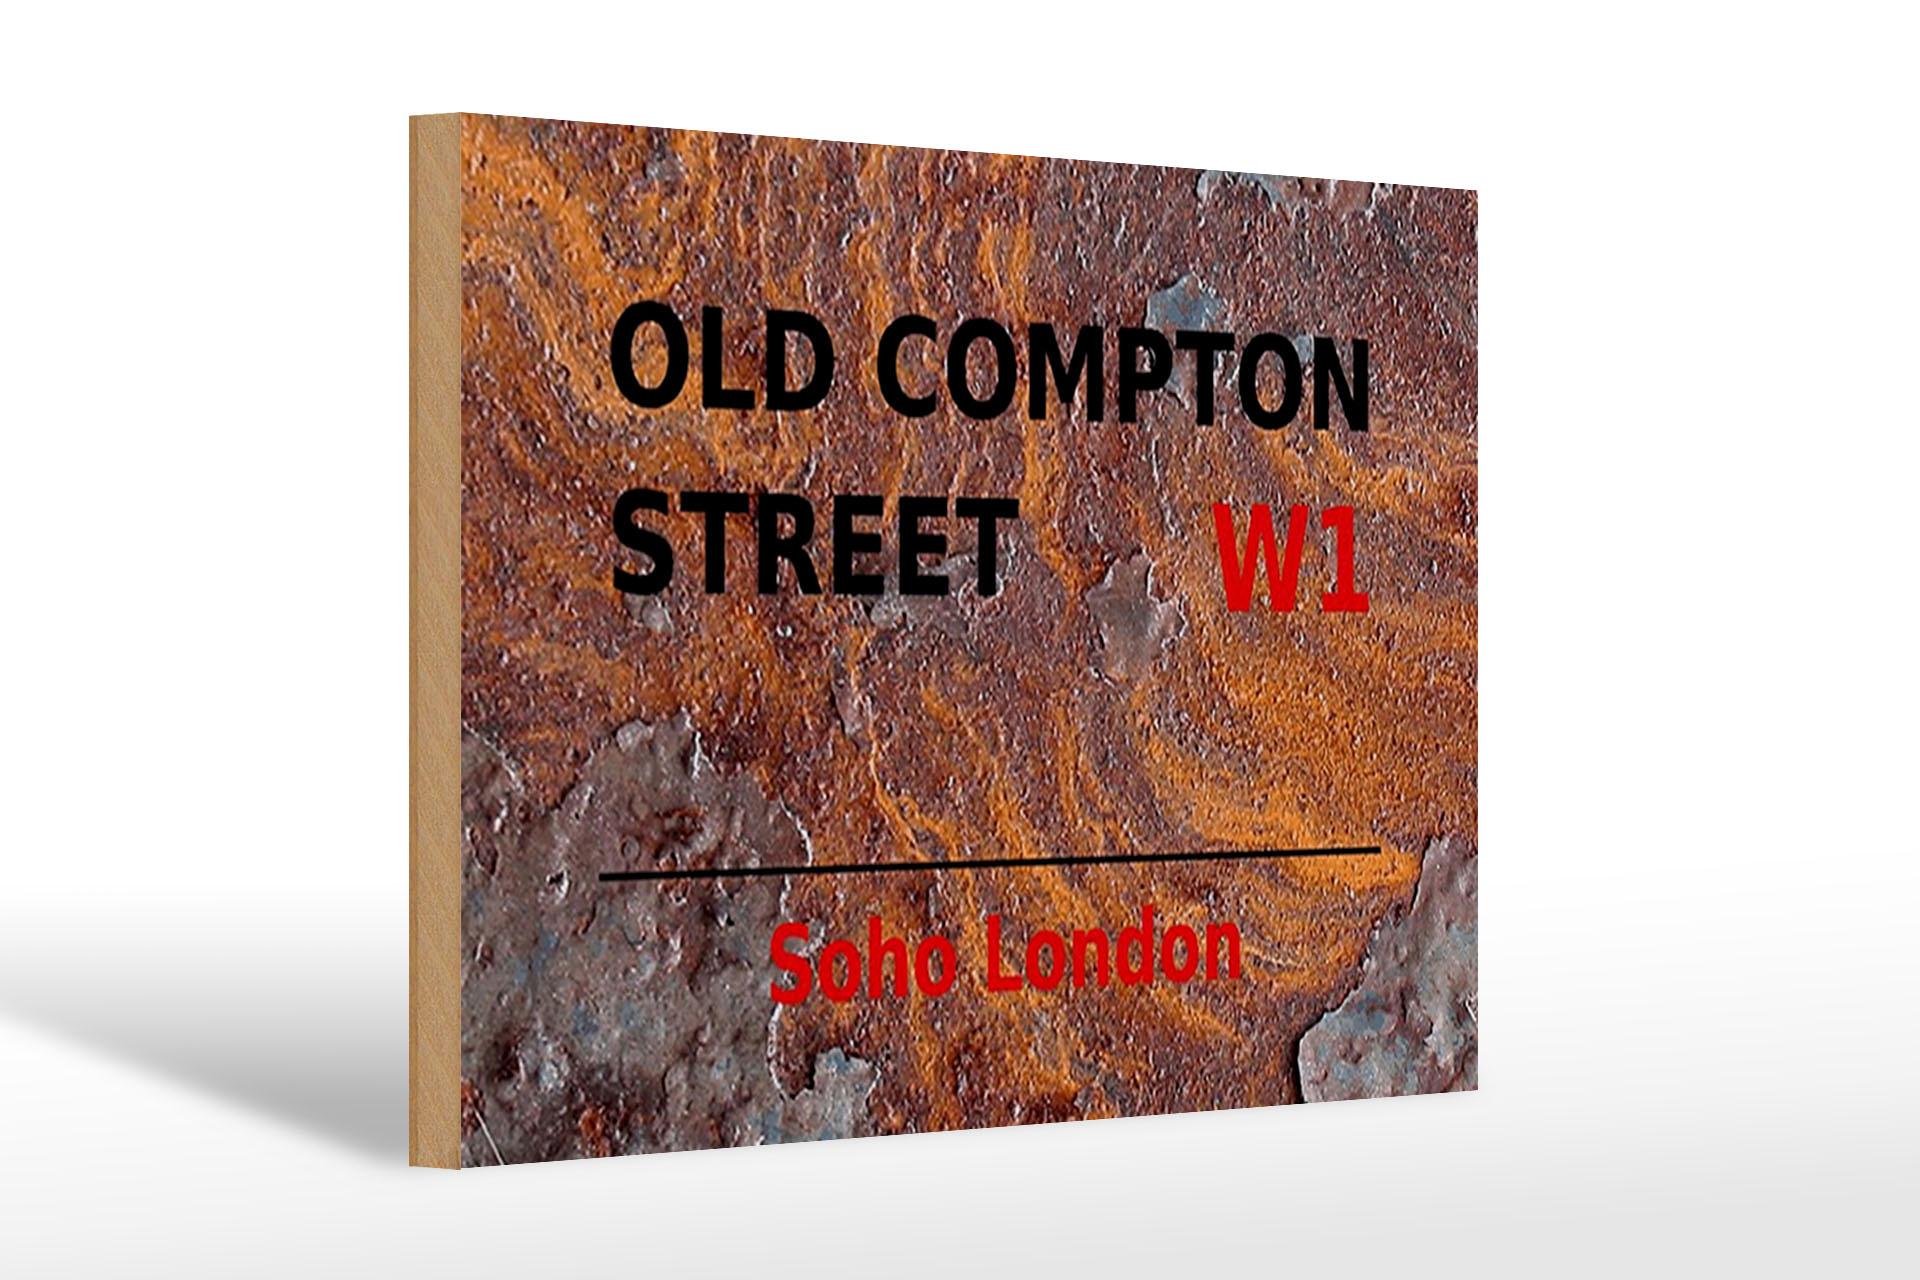 Holzschild London 30x20cm Soho Old Compton Street W1 Deko Schild wooden sign